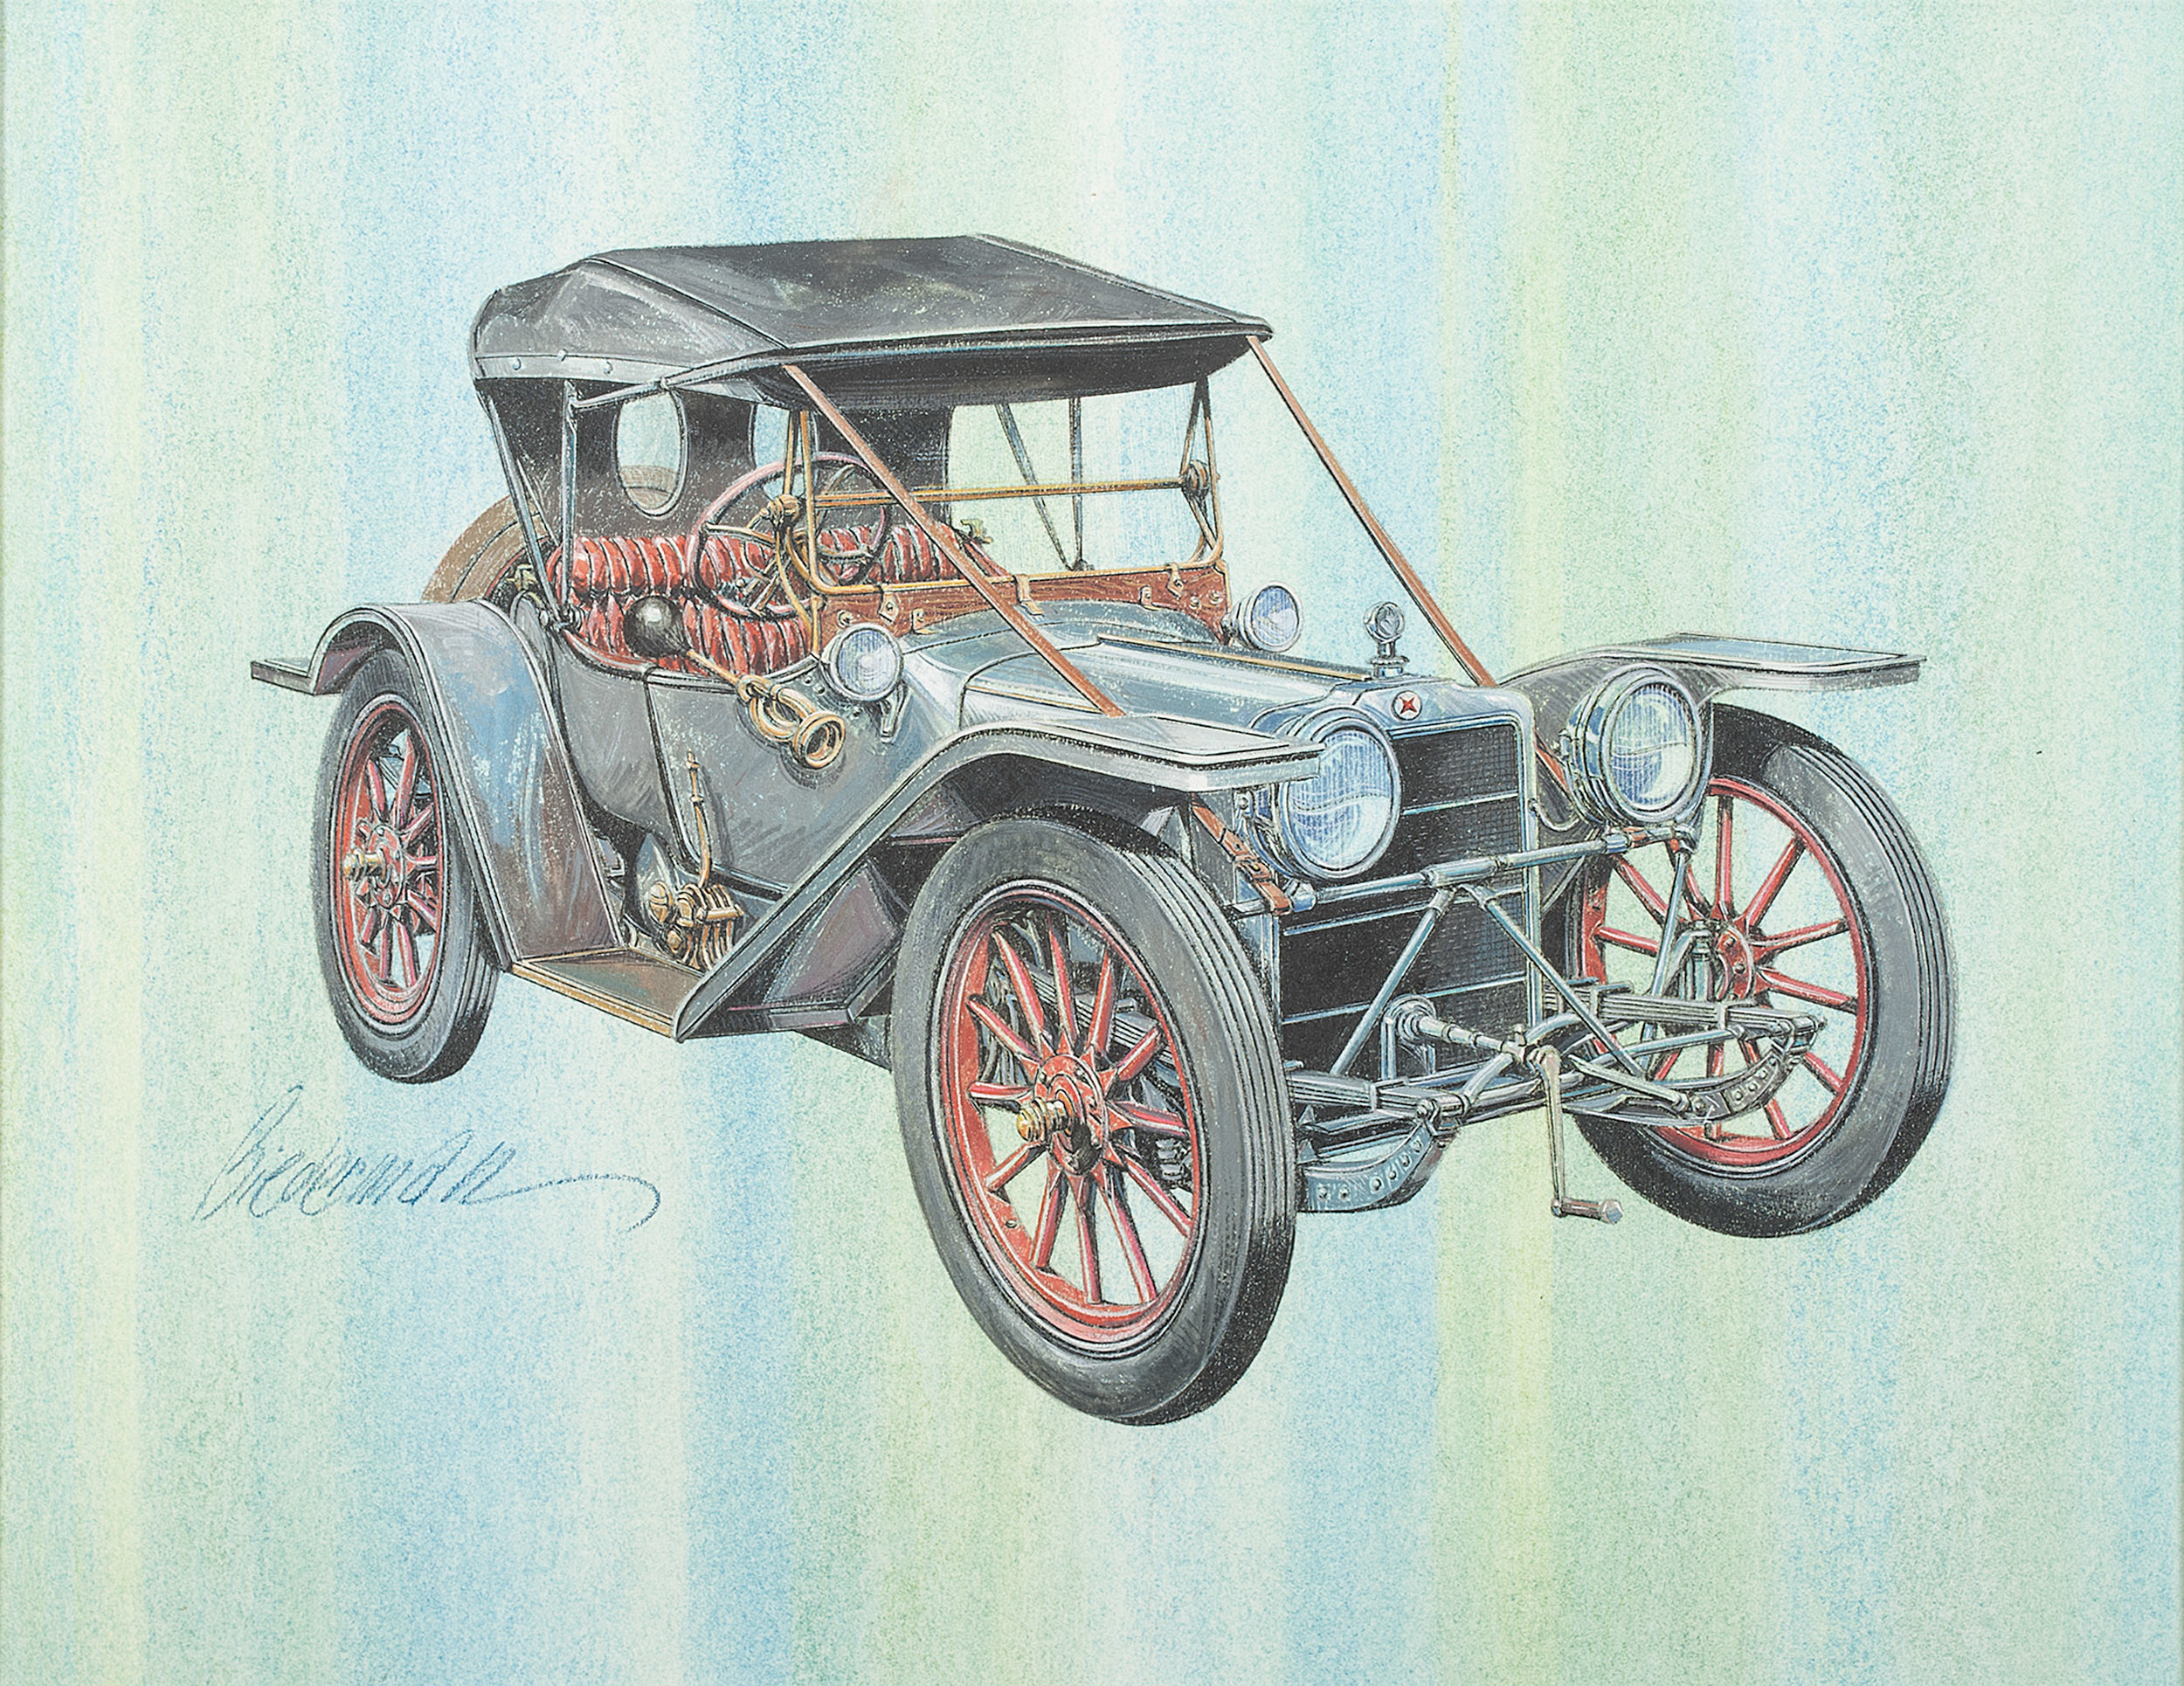 1913 American Underslung Roadster: Illustrated by Jerome D. Biederman